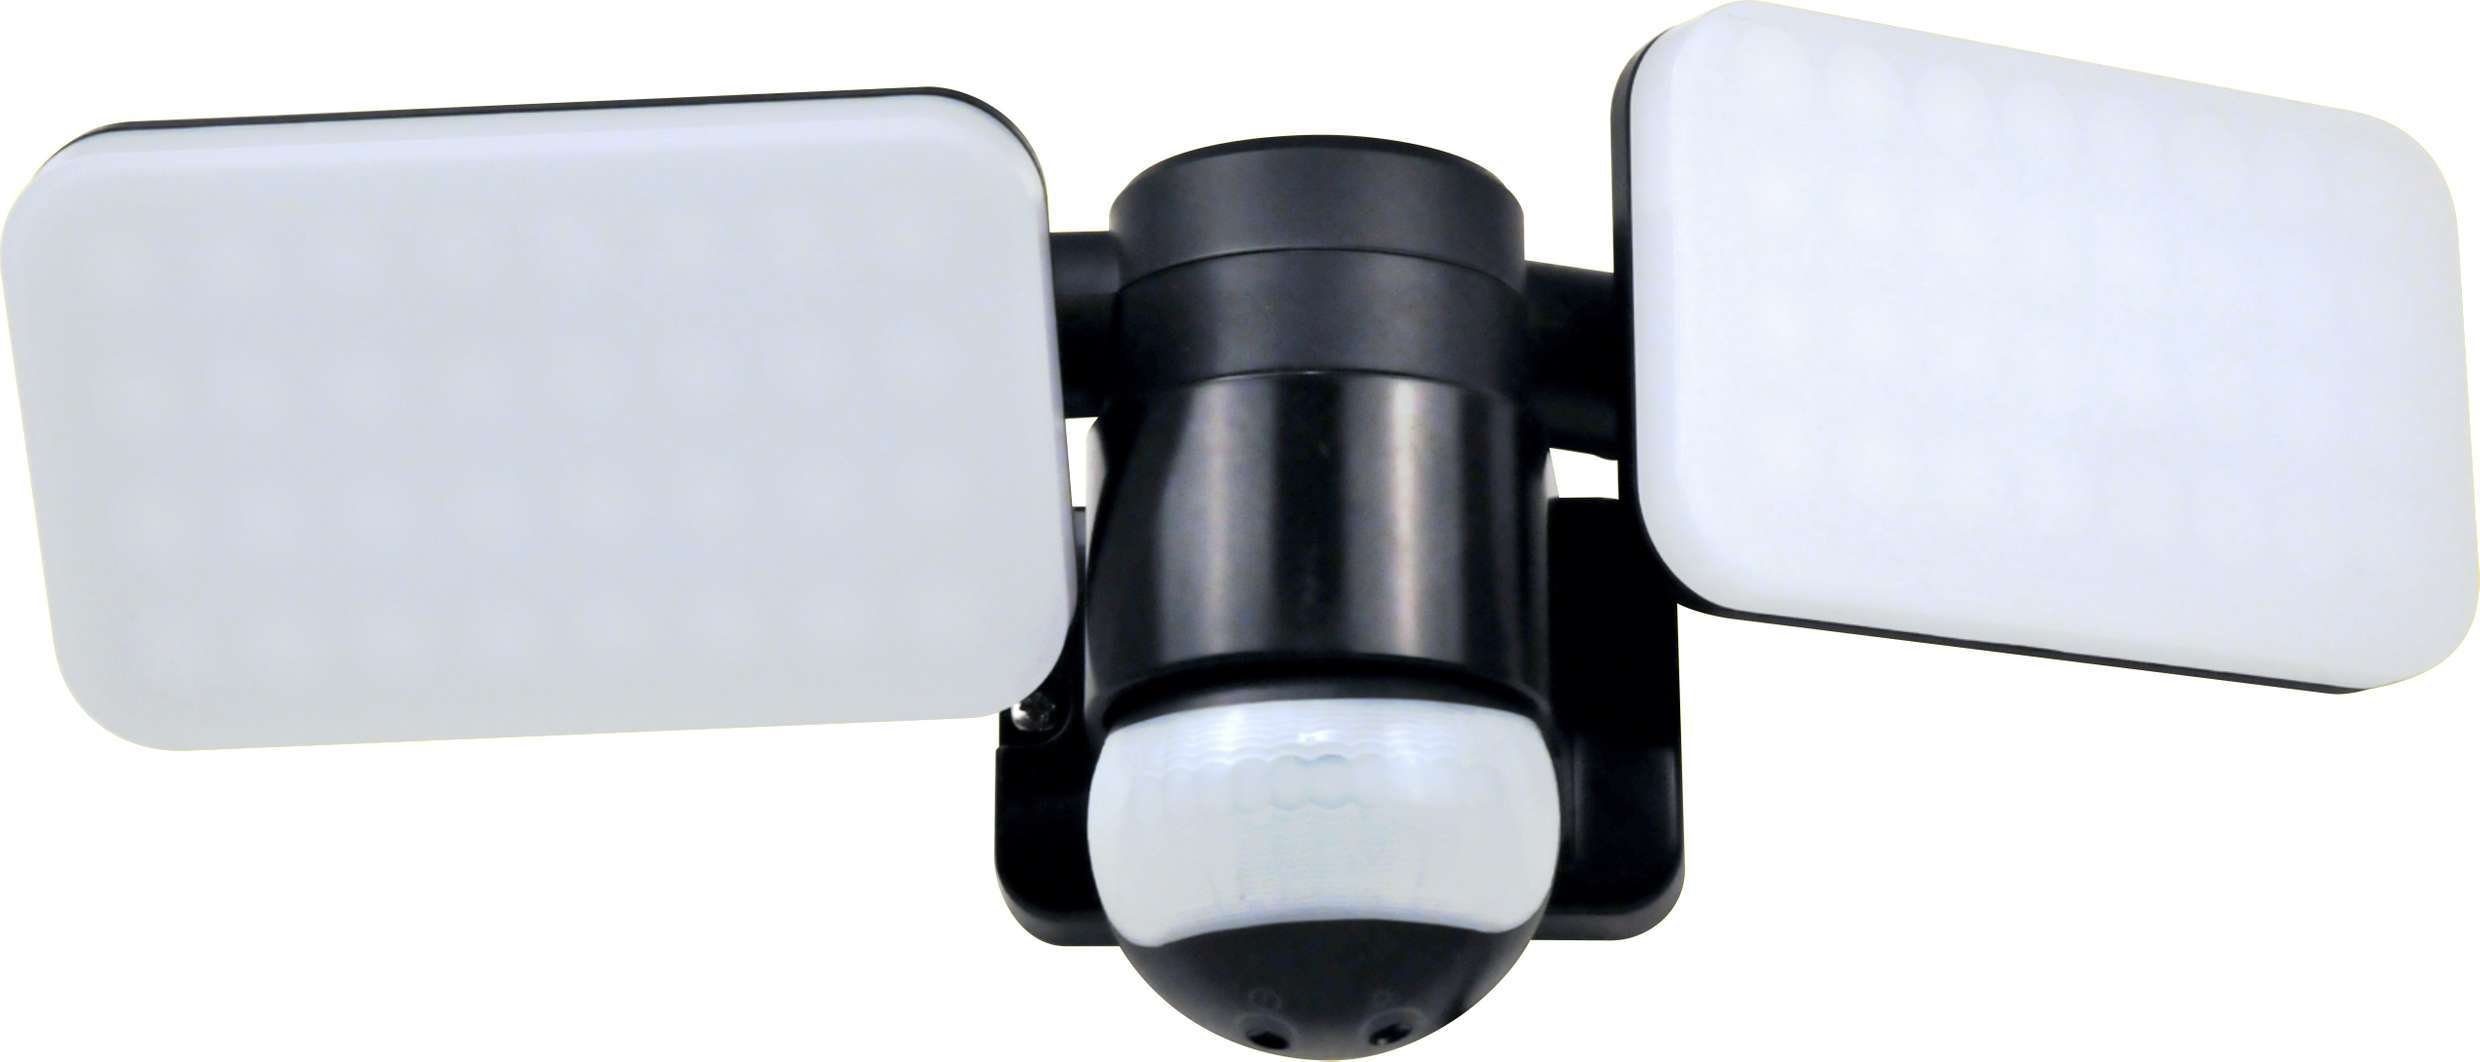 Elro LED Wandstrahler LF70, LED fest integriert, Tageslichtweiß, 2-köpfige LED Außenleuchte mit Bewegungsmelder | Wandstrahler